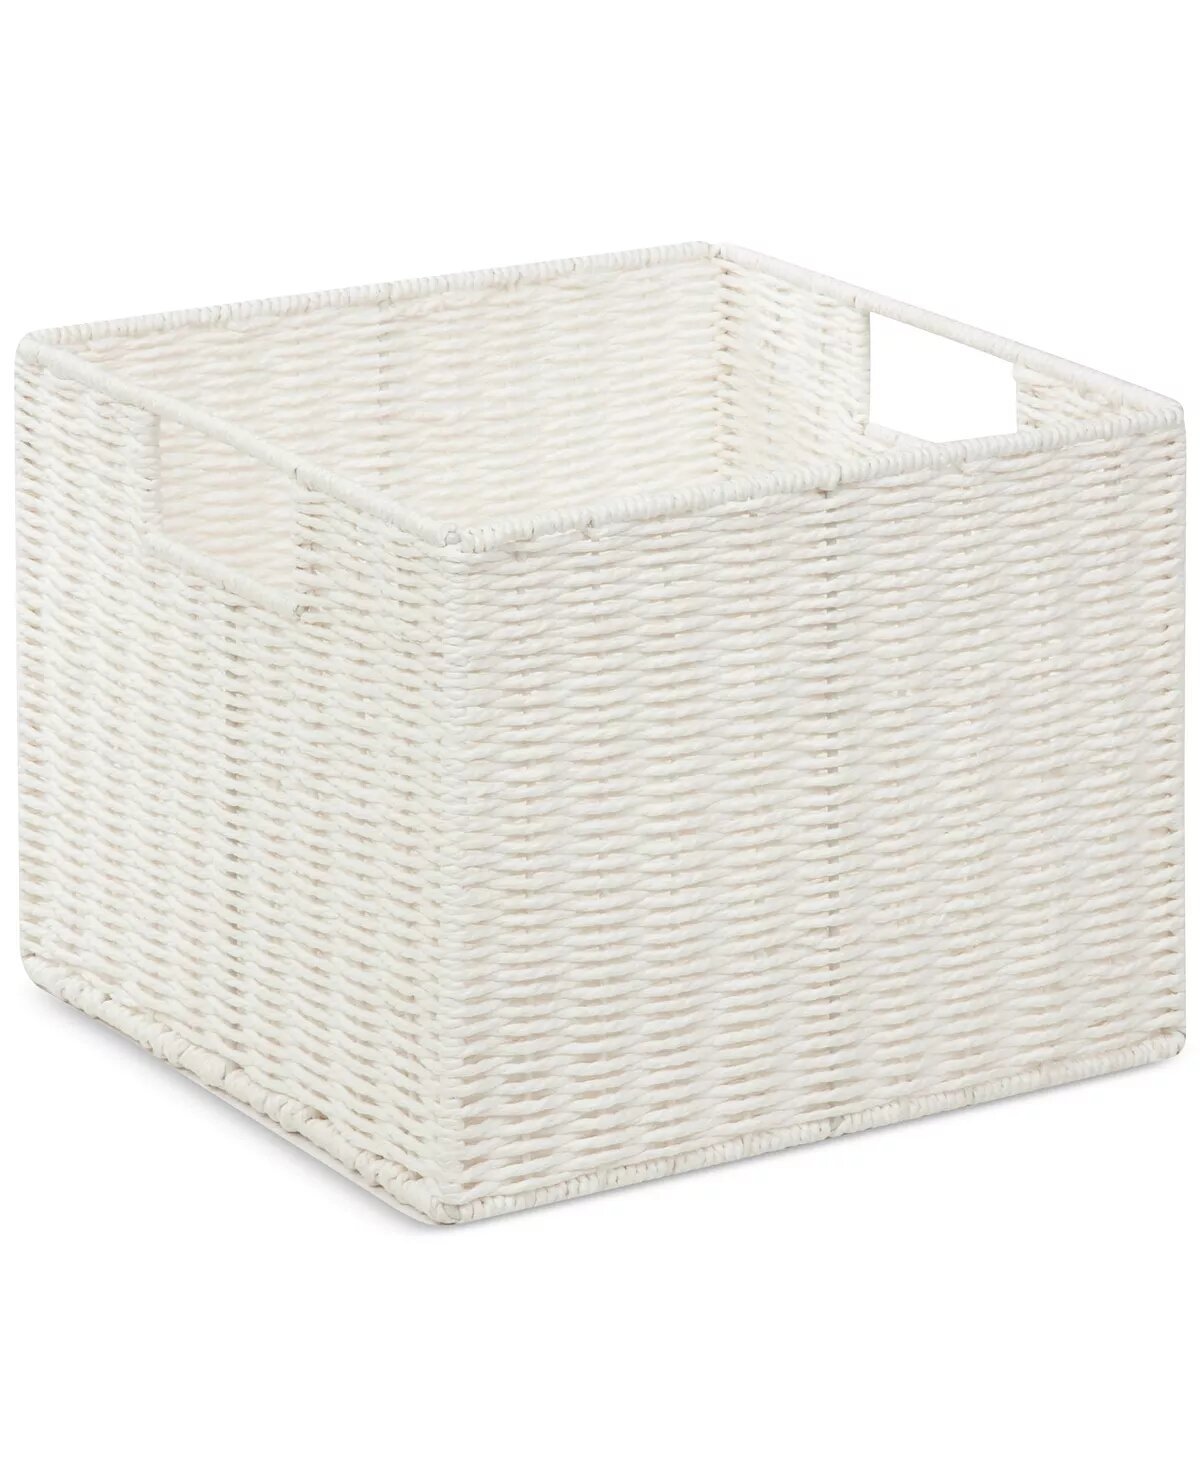 Honey-Can-Do Parchment Cord Storage Basket